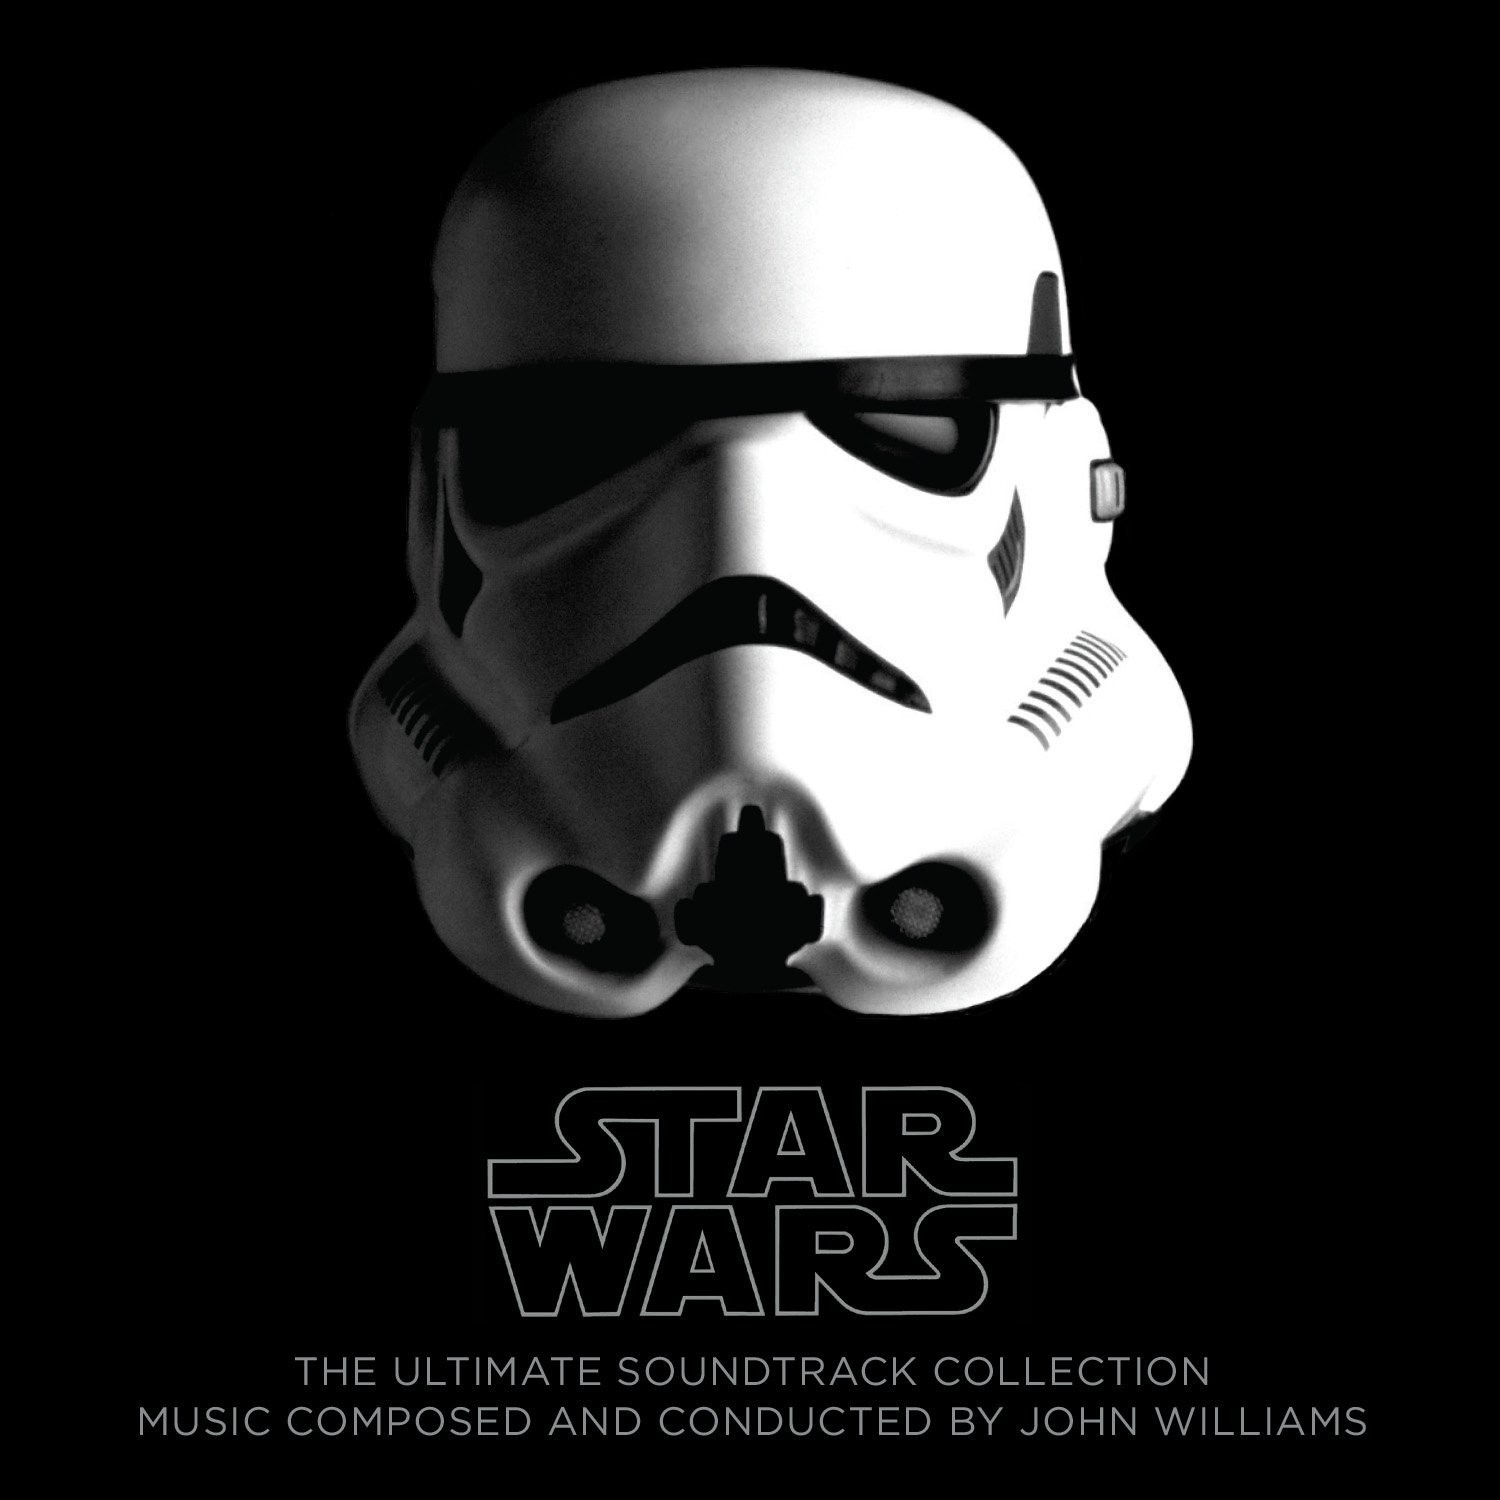 Купить star wars collection